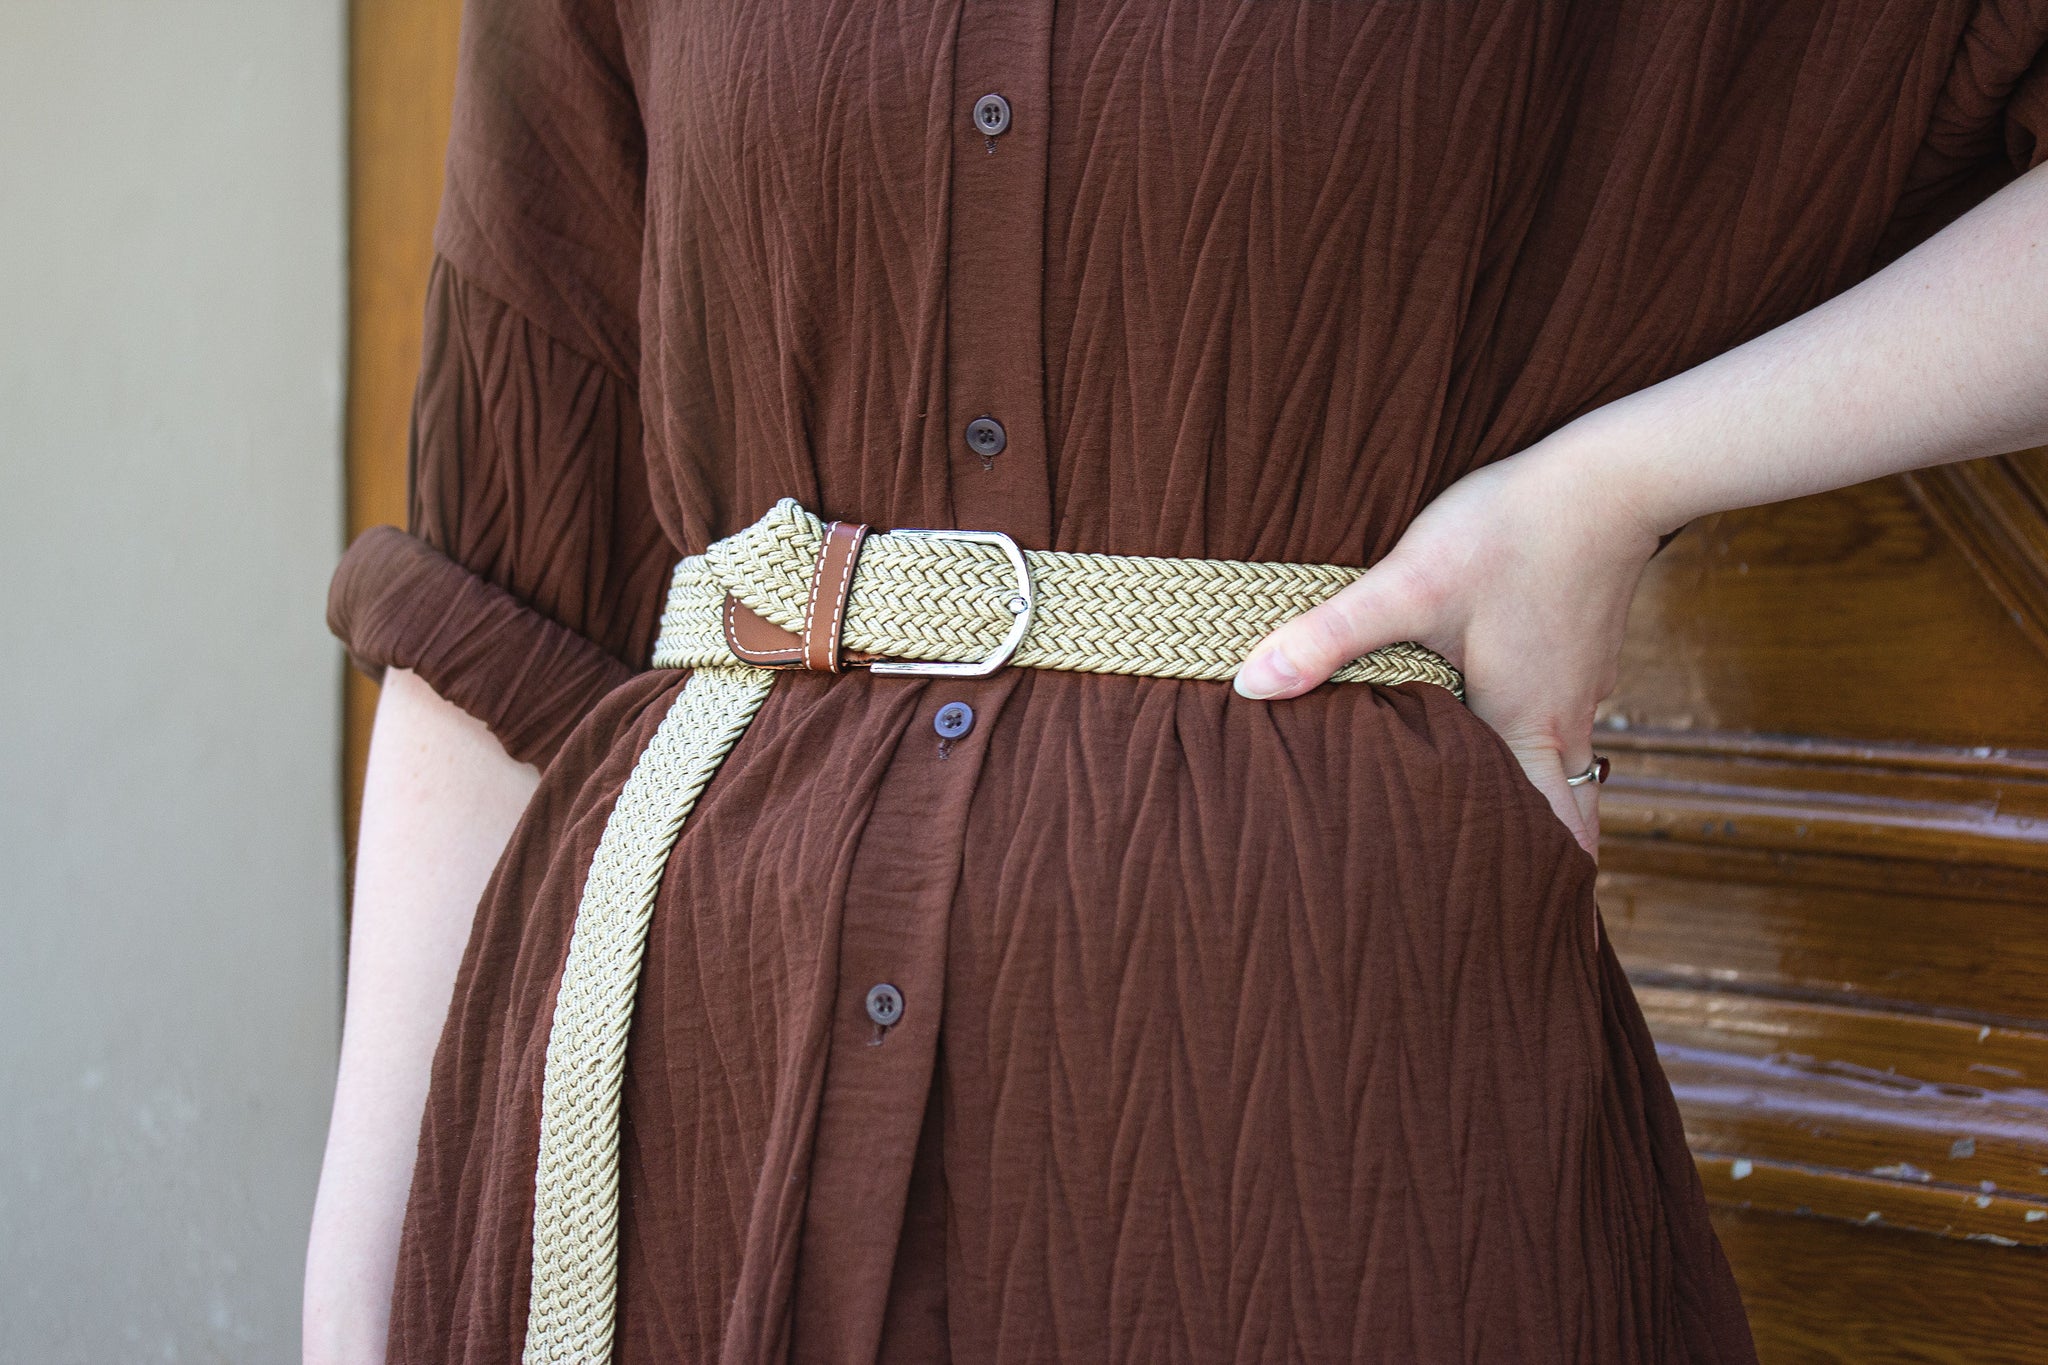 Braided belt - Nylon / fabric (plain color or bicolor)